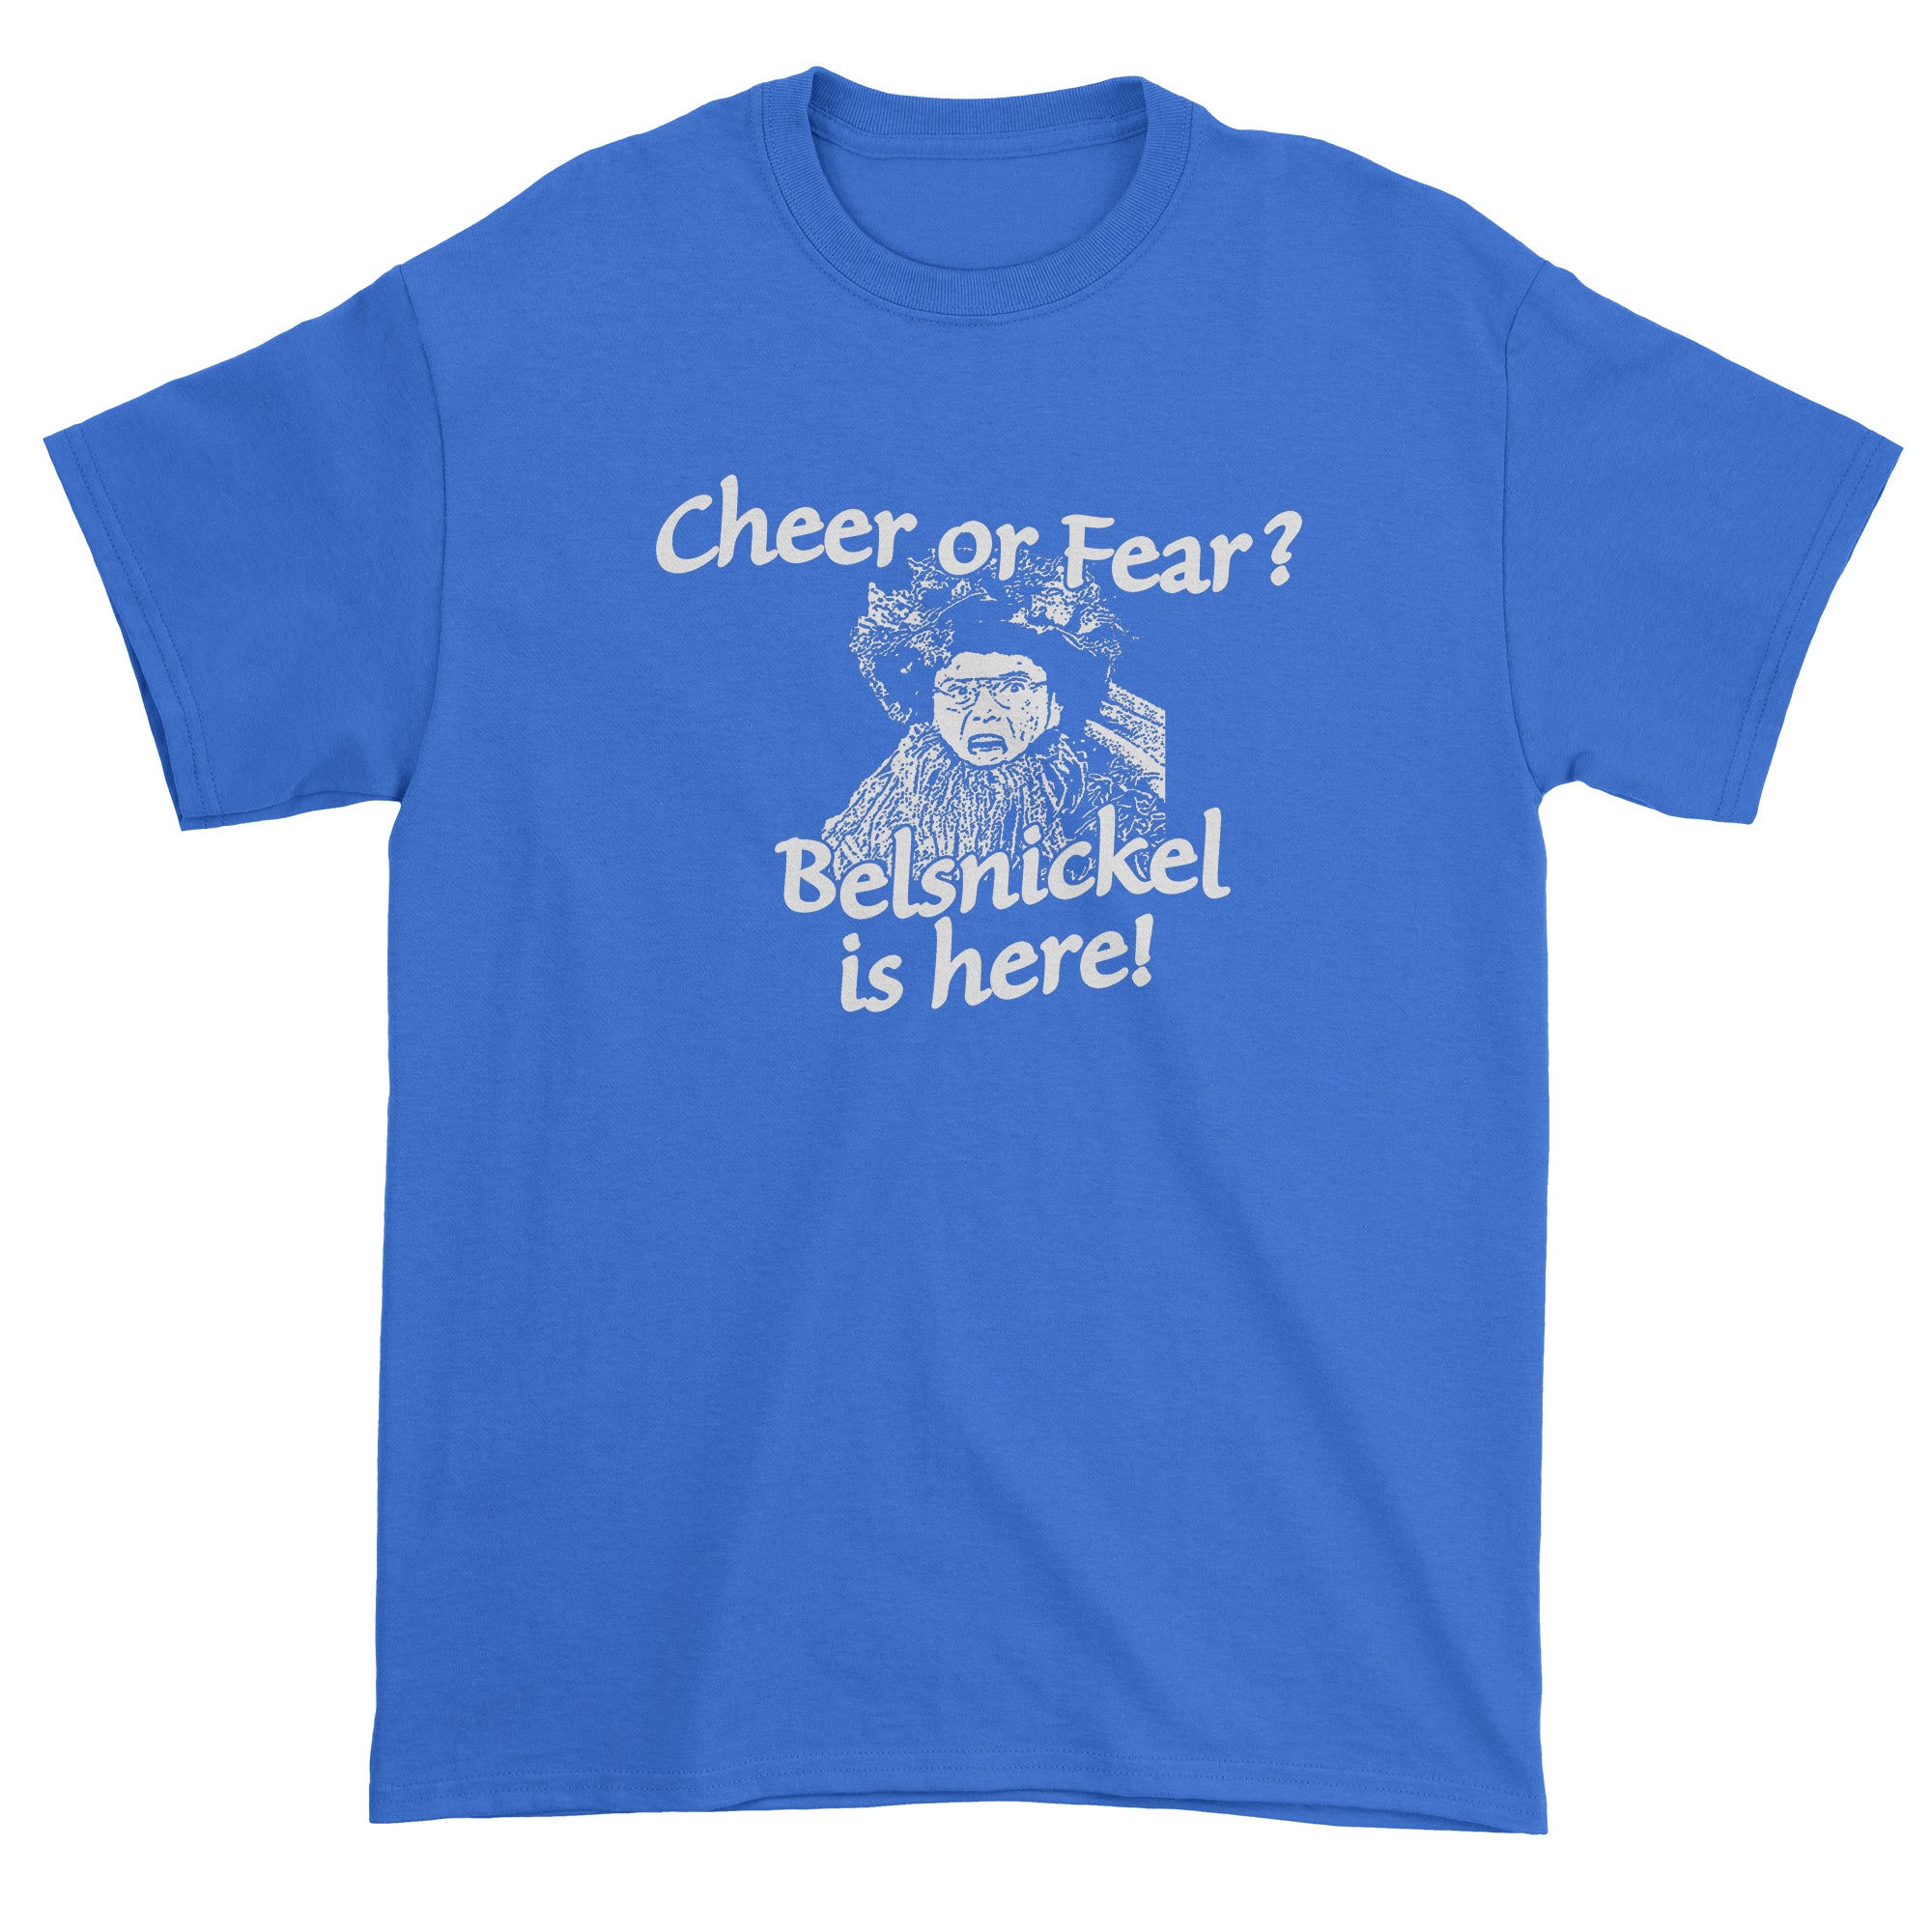 Belsnickel Cheer or Fear Men's T-Shirt